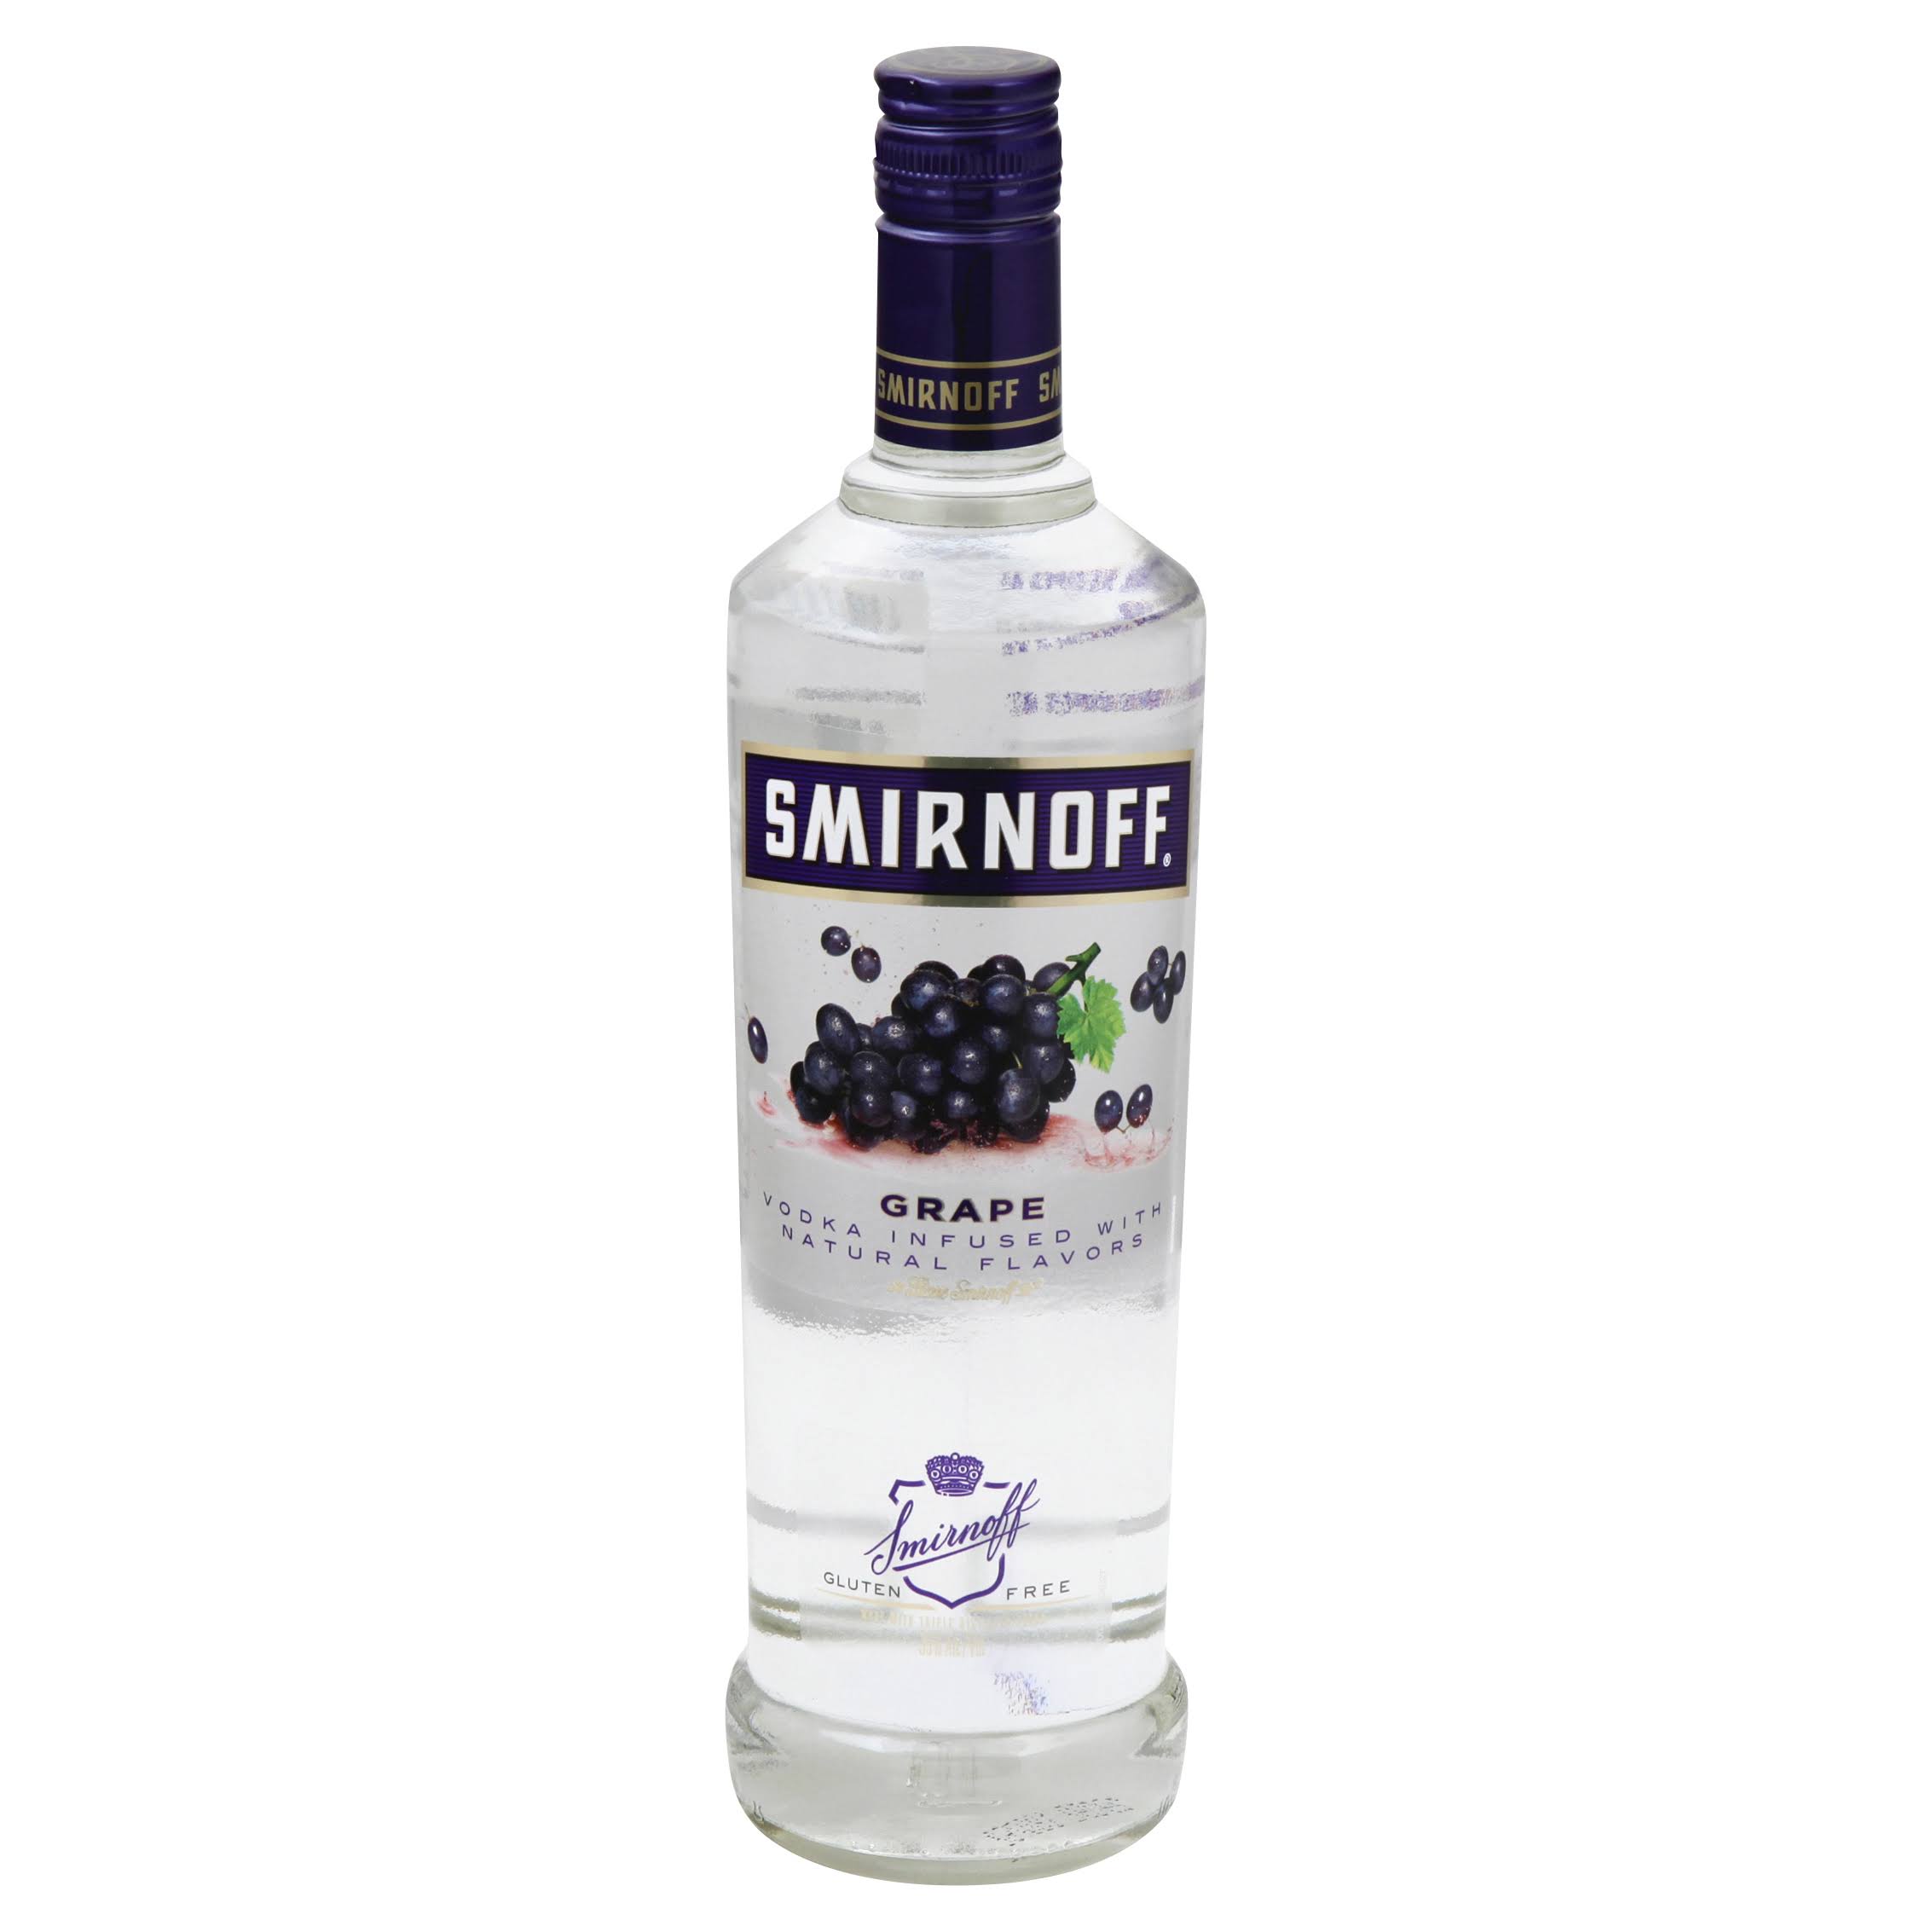 Smirnoff Vodka, Grape - 750 ml